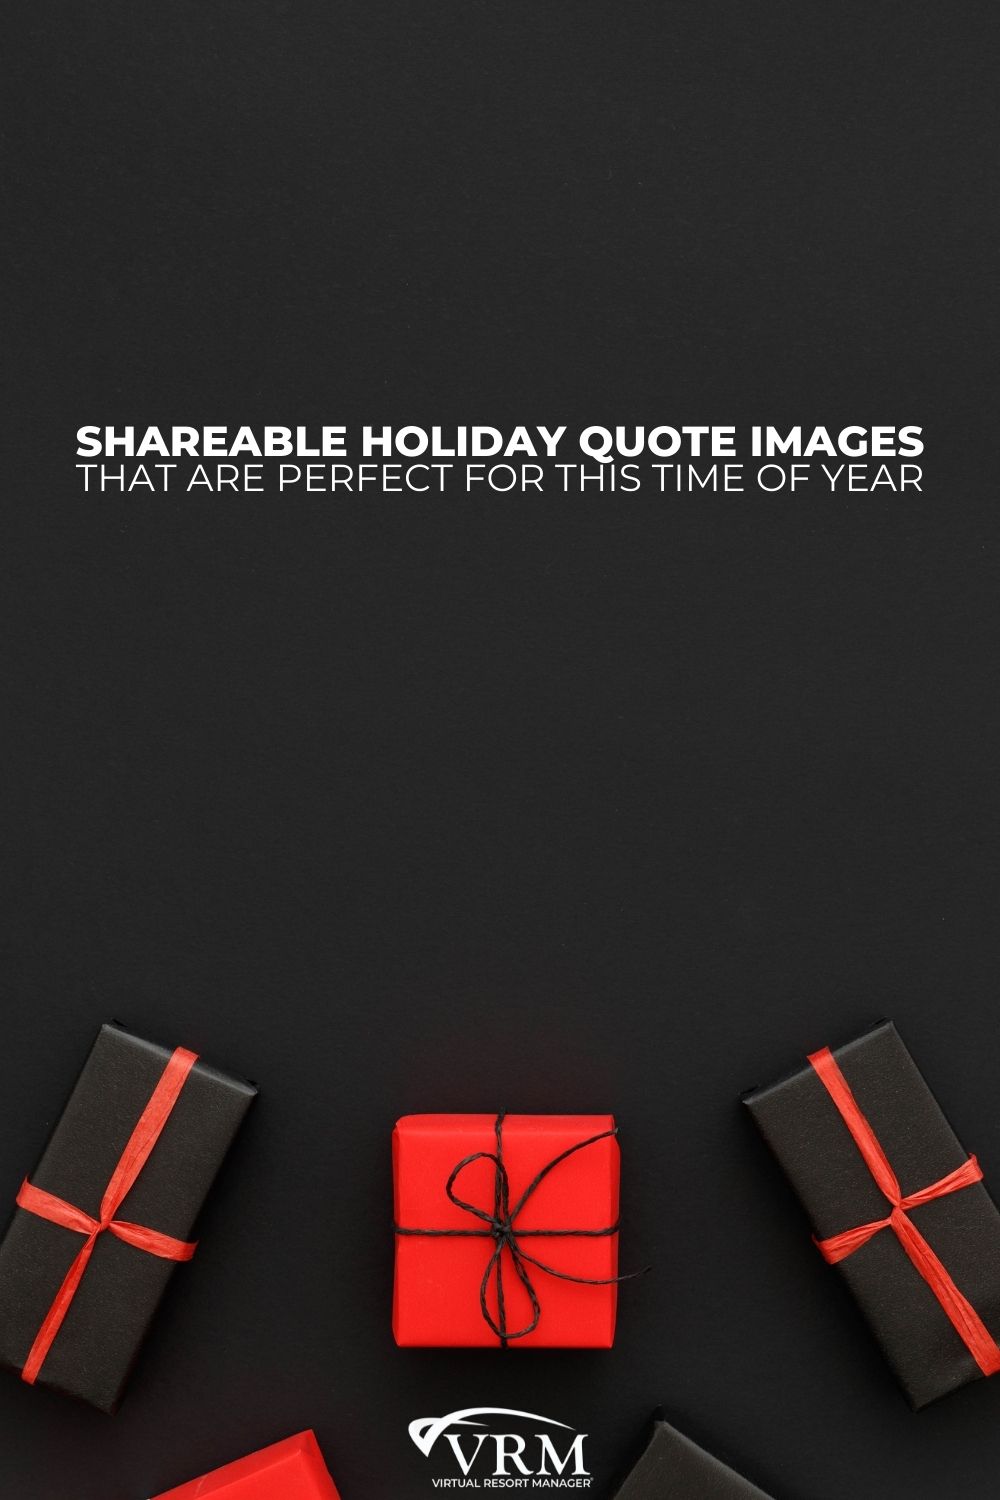 https://www.virtualresortmanager.com/uploads/blog-media/2021/holiday-quotes/vrm-header-royalty-free-holiday-quote-images.jpg